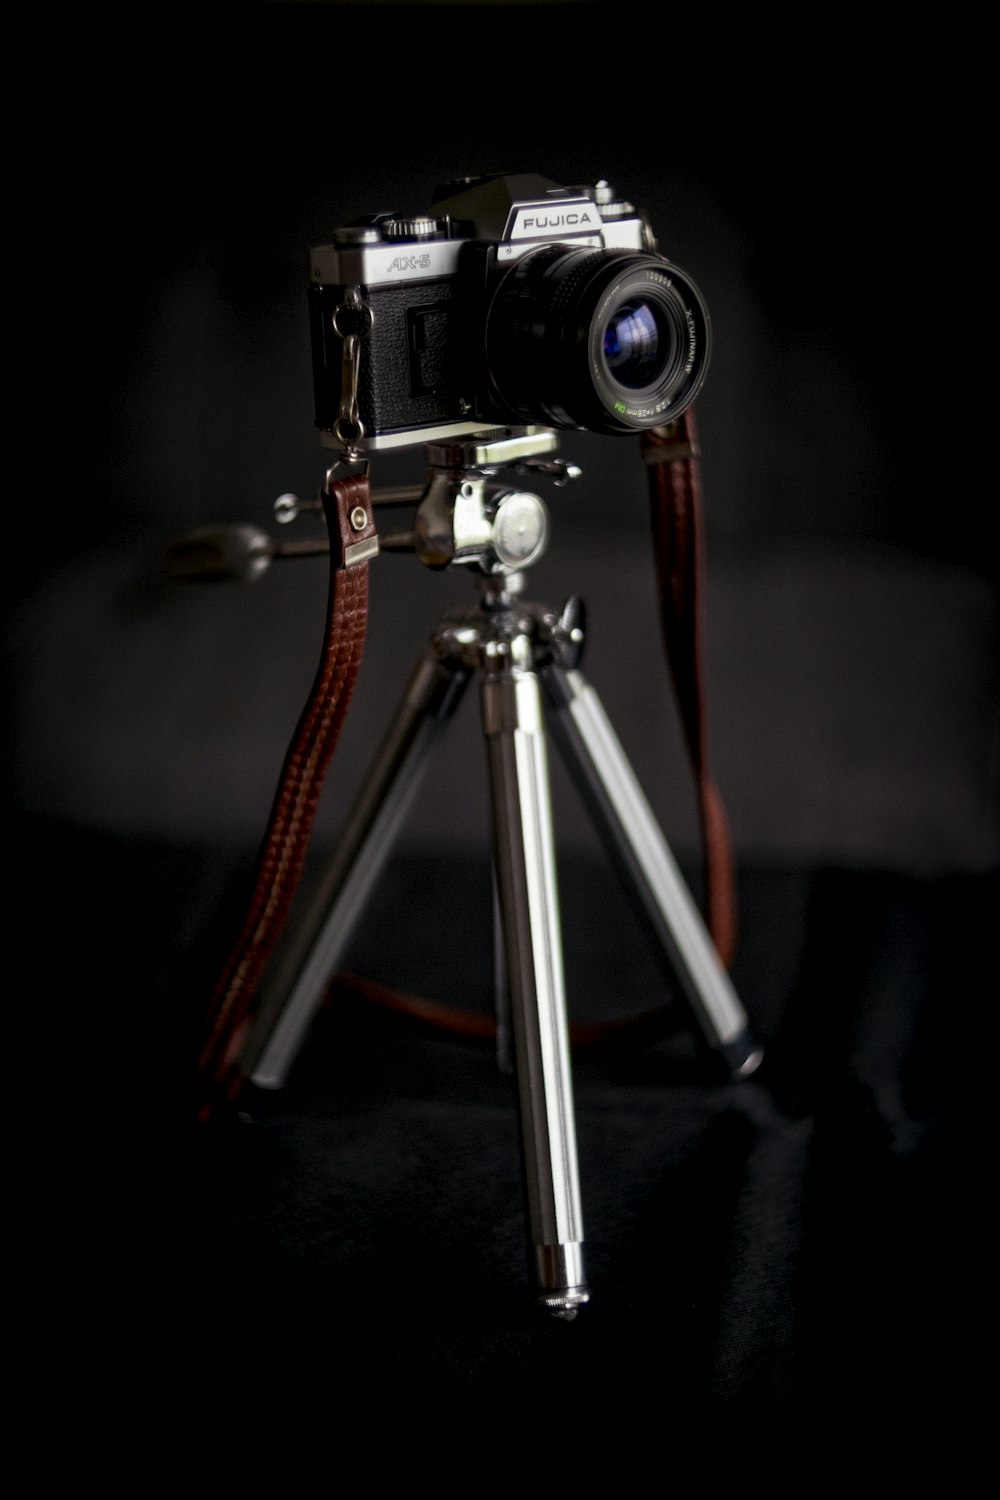 fotocamera DSLR nera e argento con treppiede